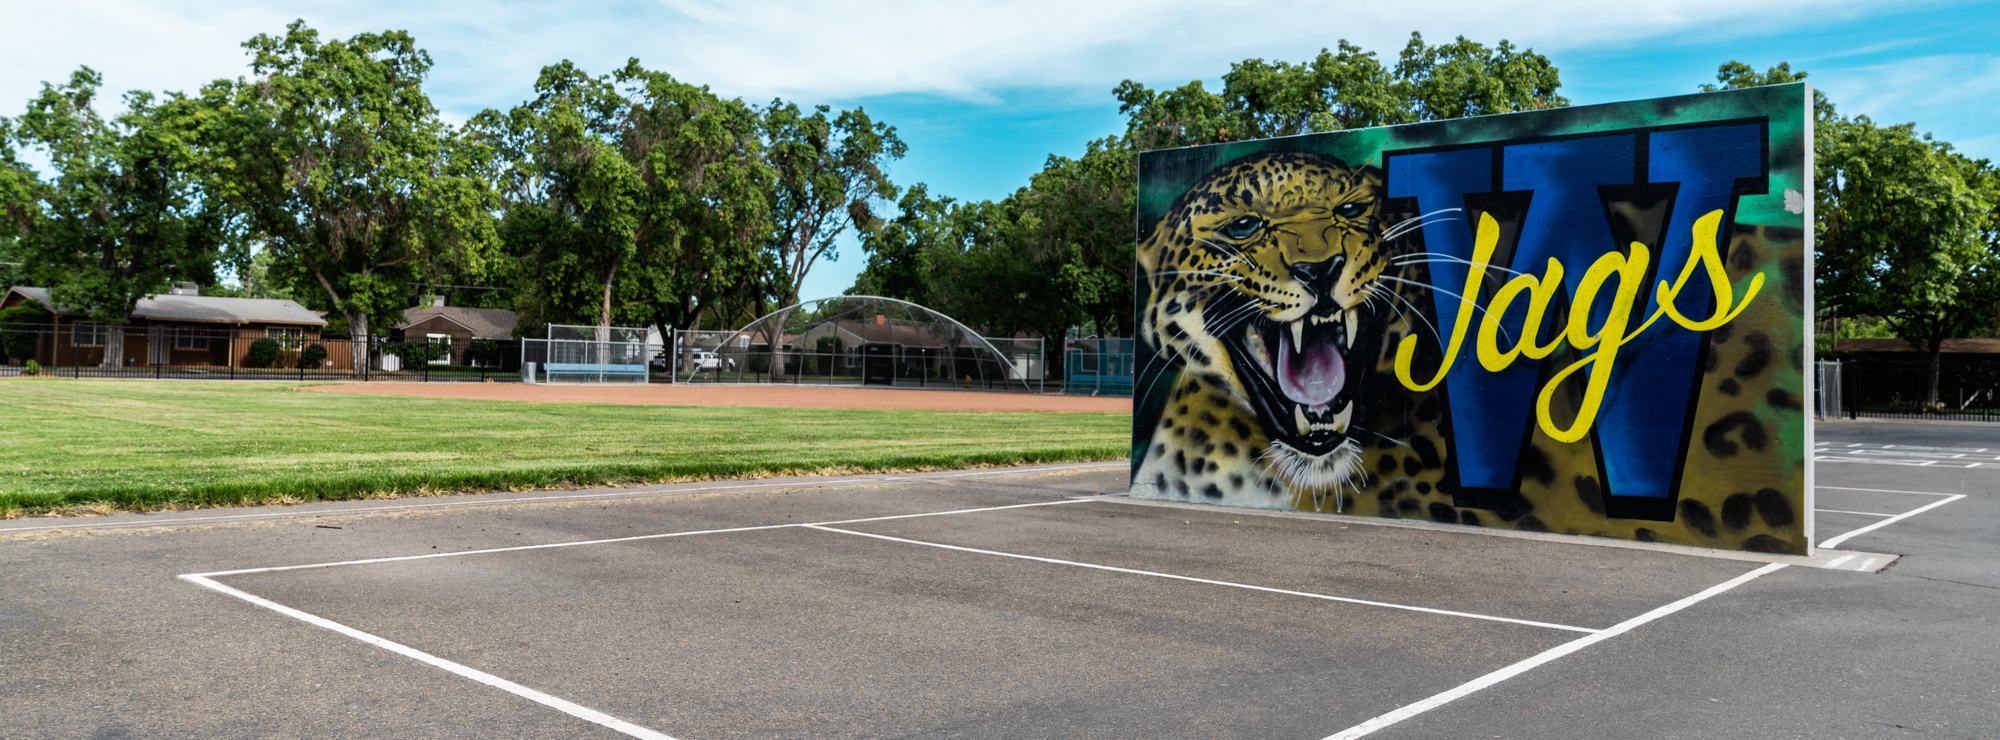 Wilson Jaguars mural on blacktop